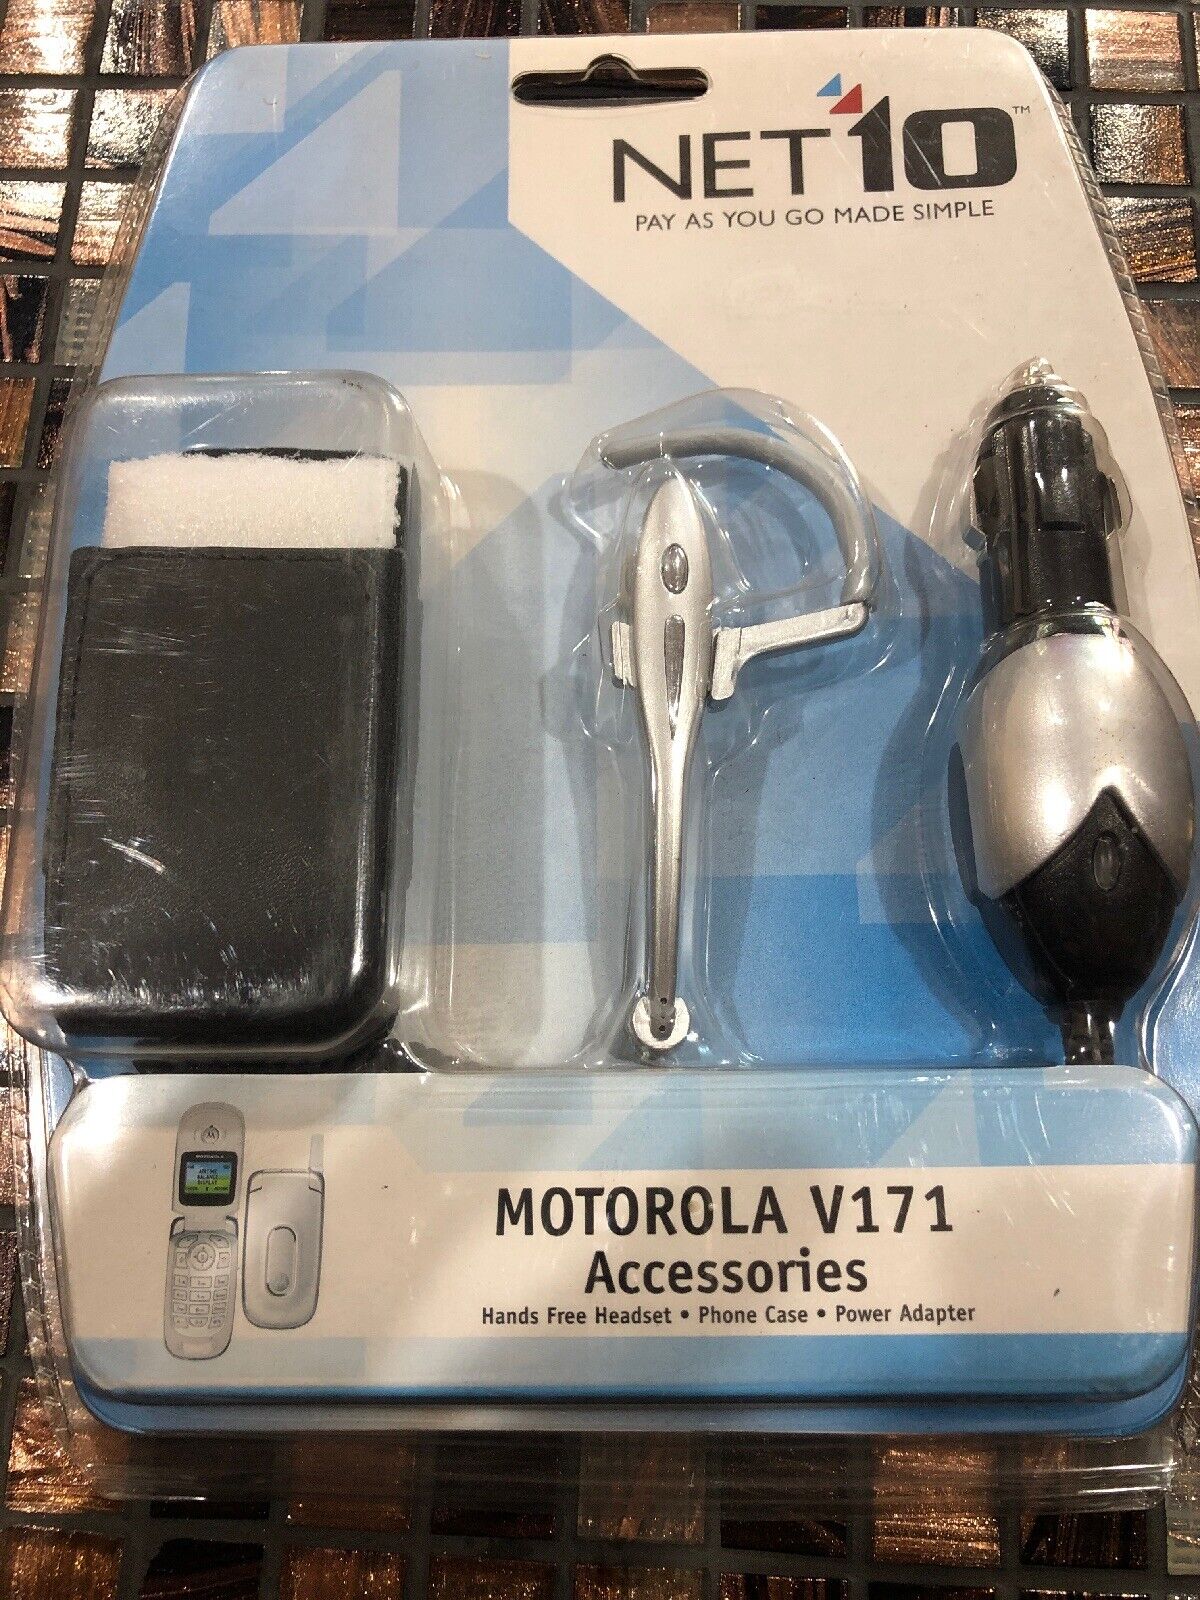 Net 10 tm Motorola V171 Accessories Pay As You Go Made Simple 